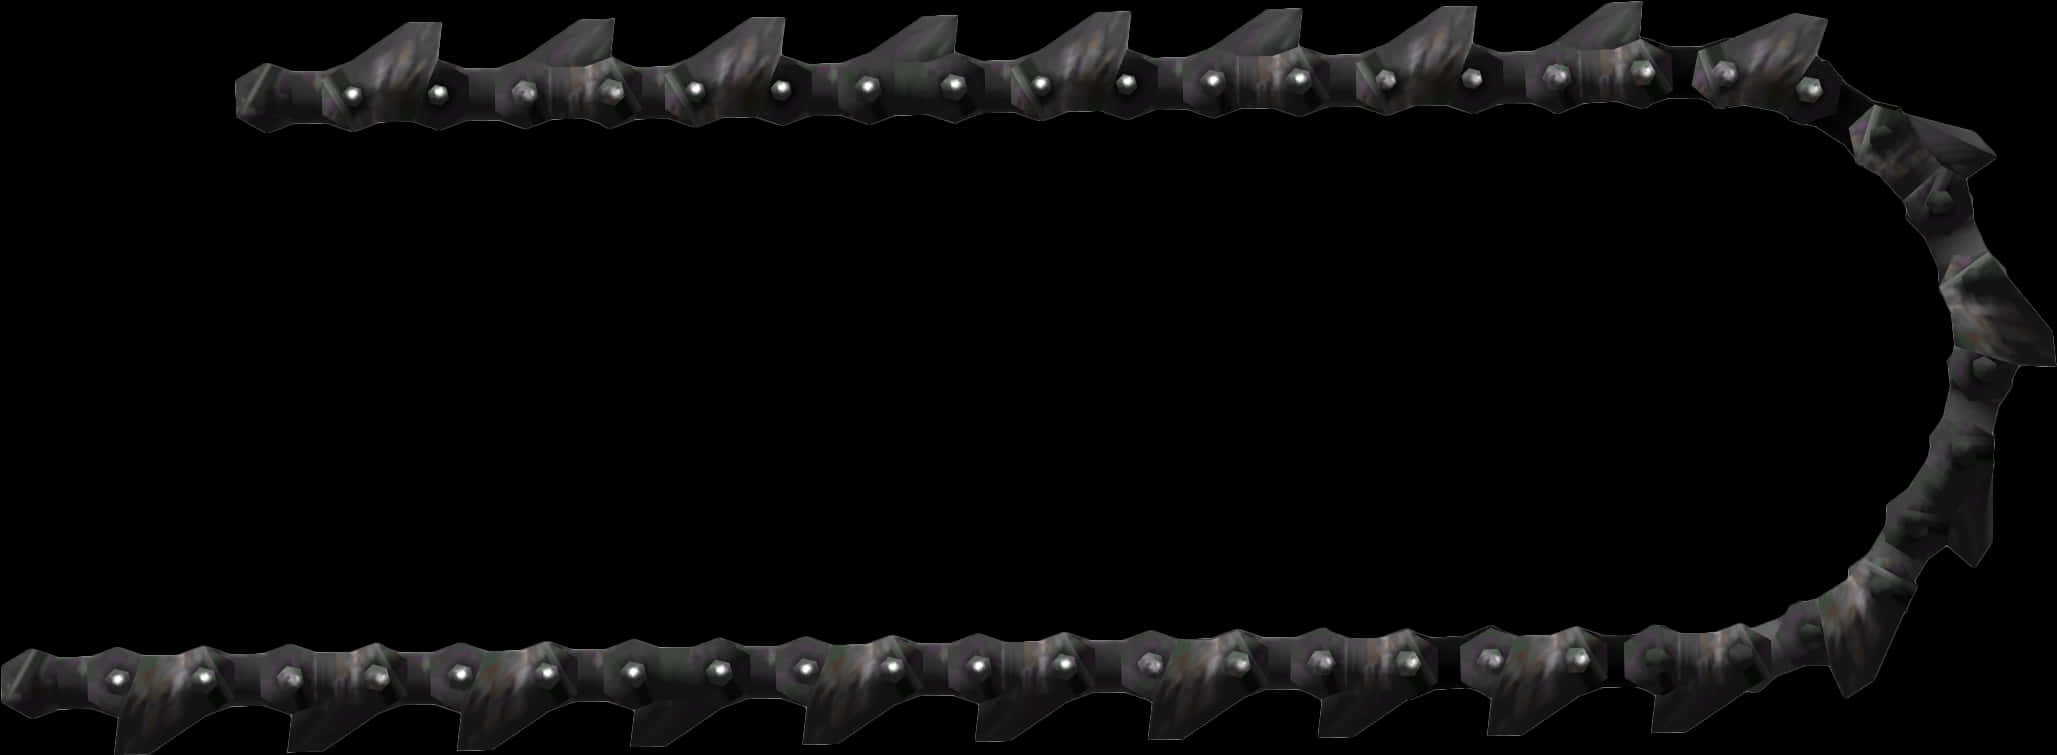 Metallic Spiked Chain Frame